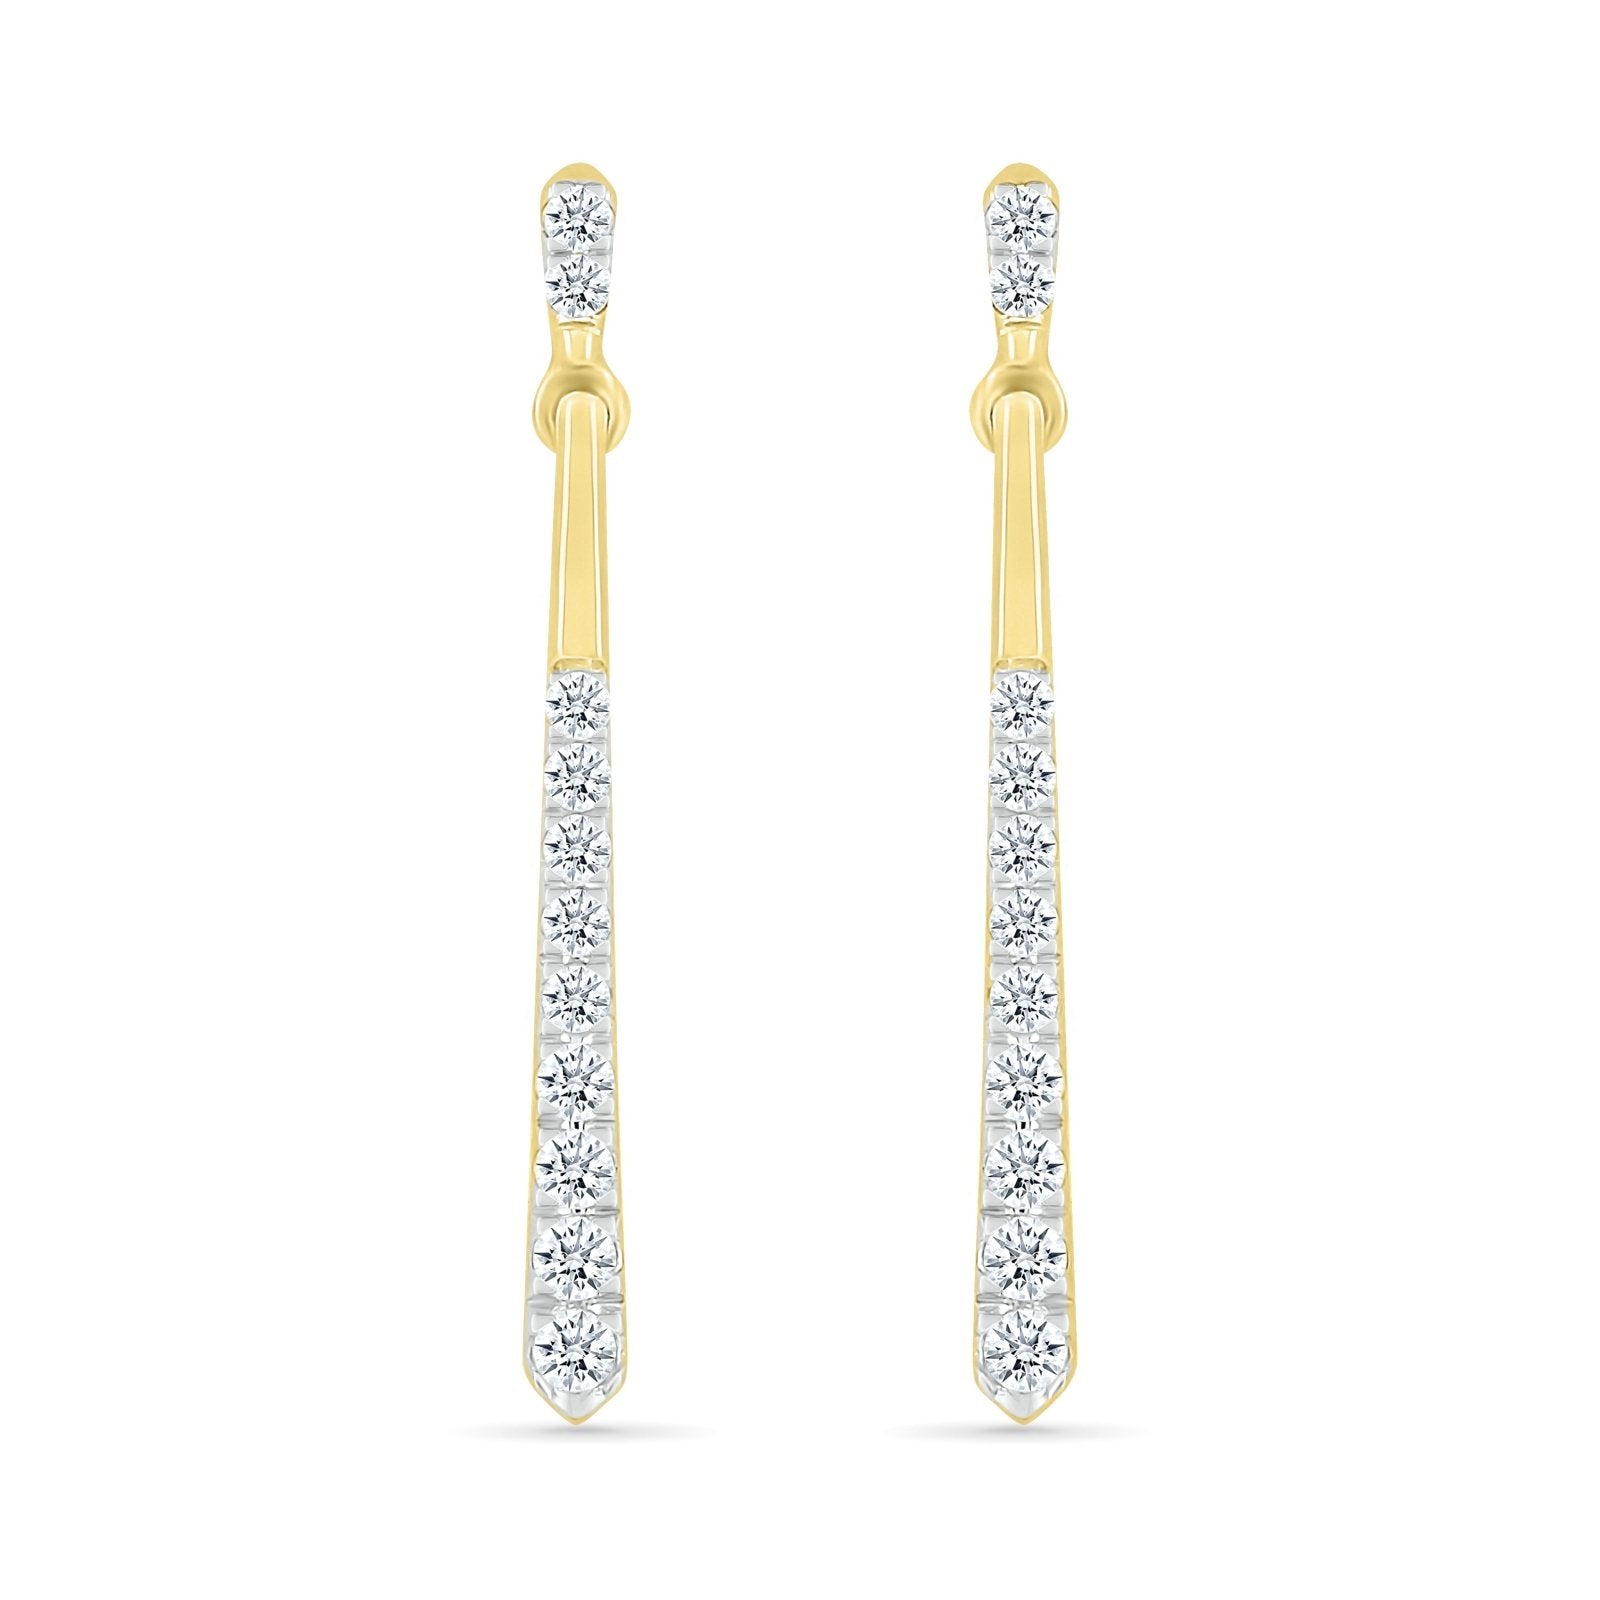 Long Diamond Dangle Stud Earrings Earrings Estella Collection 32664 Diamond Made to Order New Arrivals #tag4# #tag5# #tag6# #tag7# #tag8# #tag9# #tag10#